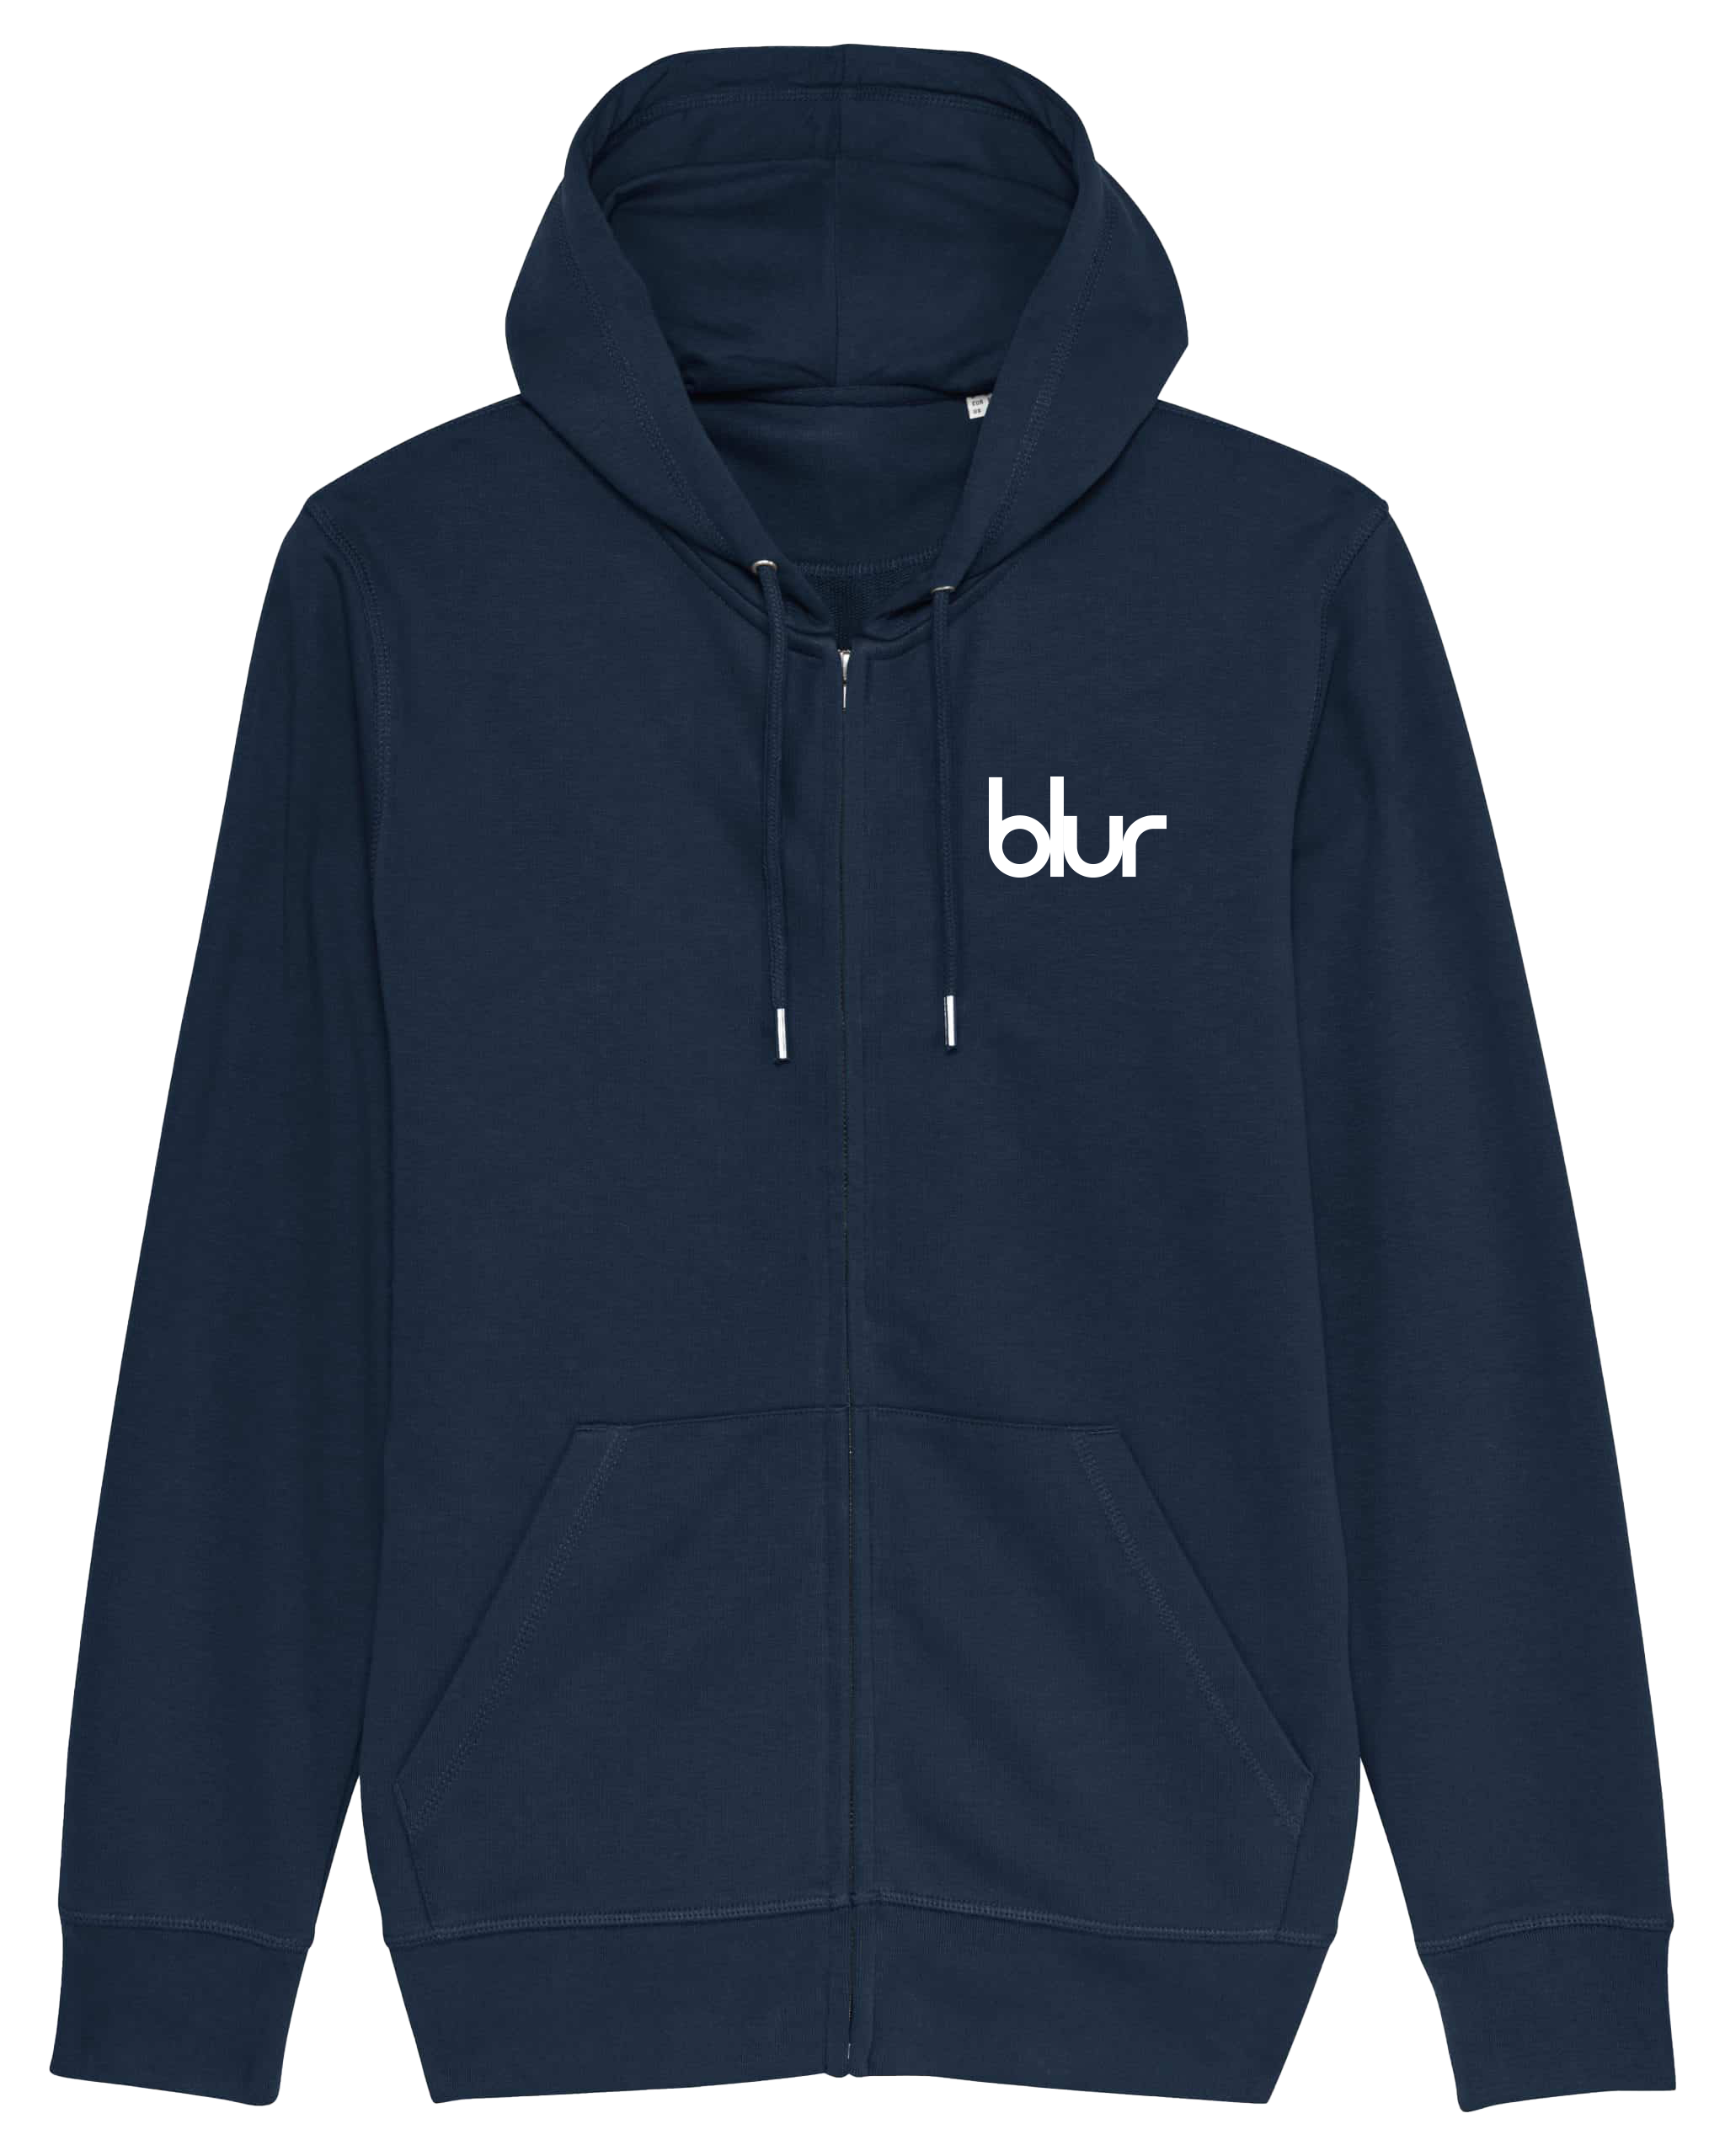 Blur Logo Zip Hoodie | Blur Official Store